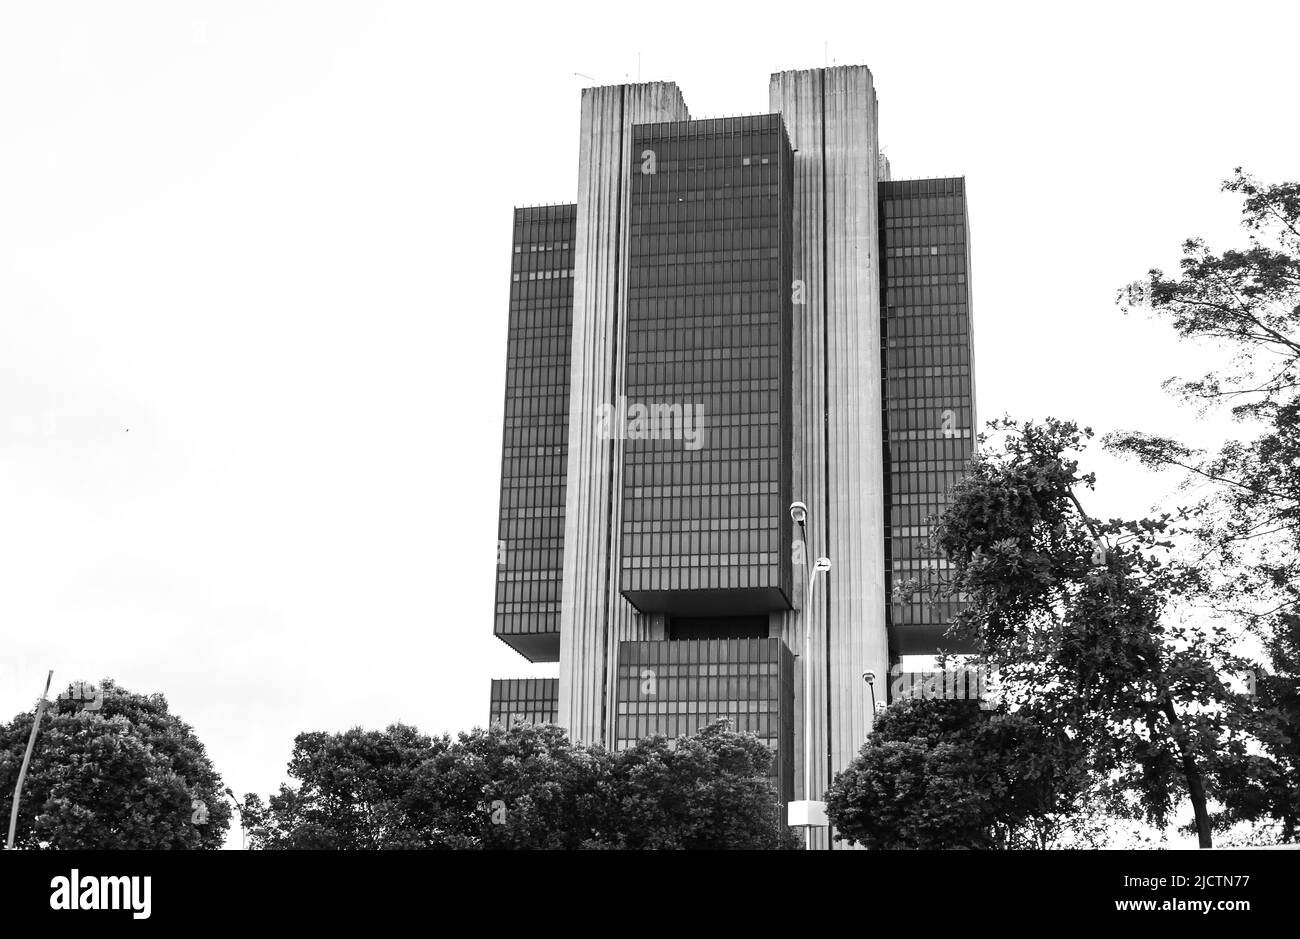 Zentralbank von Brasilien. Brasilia, Federal District - Brasilien. Dezember 04, 2021. Stockfoto